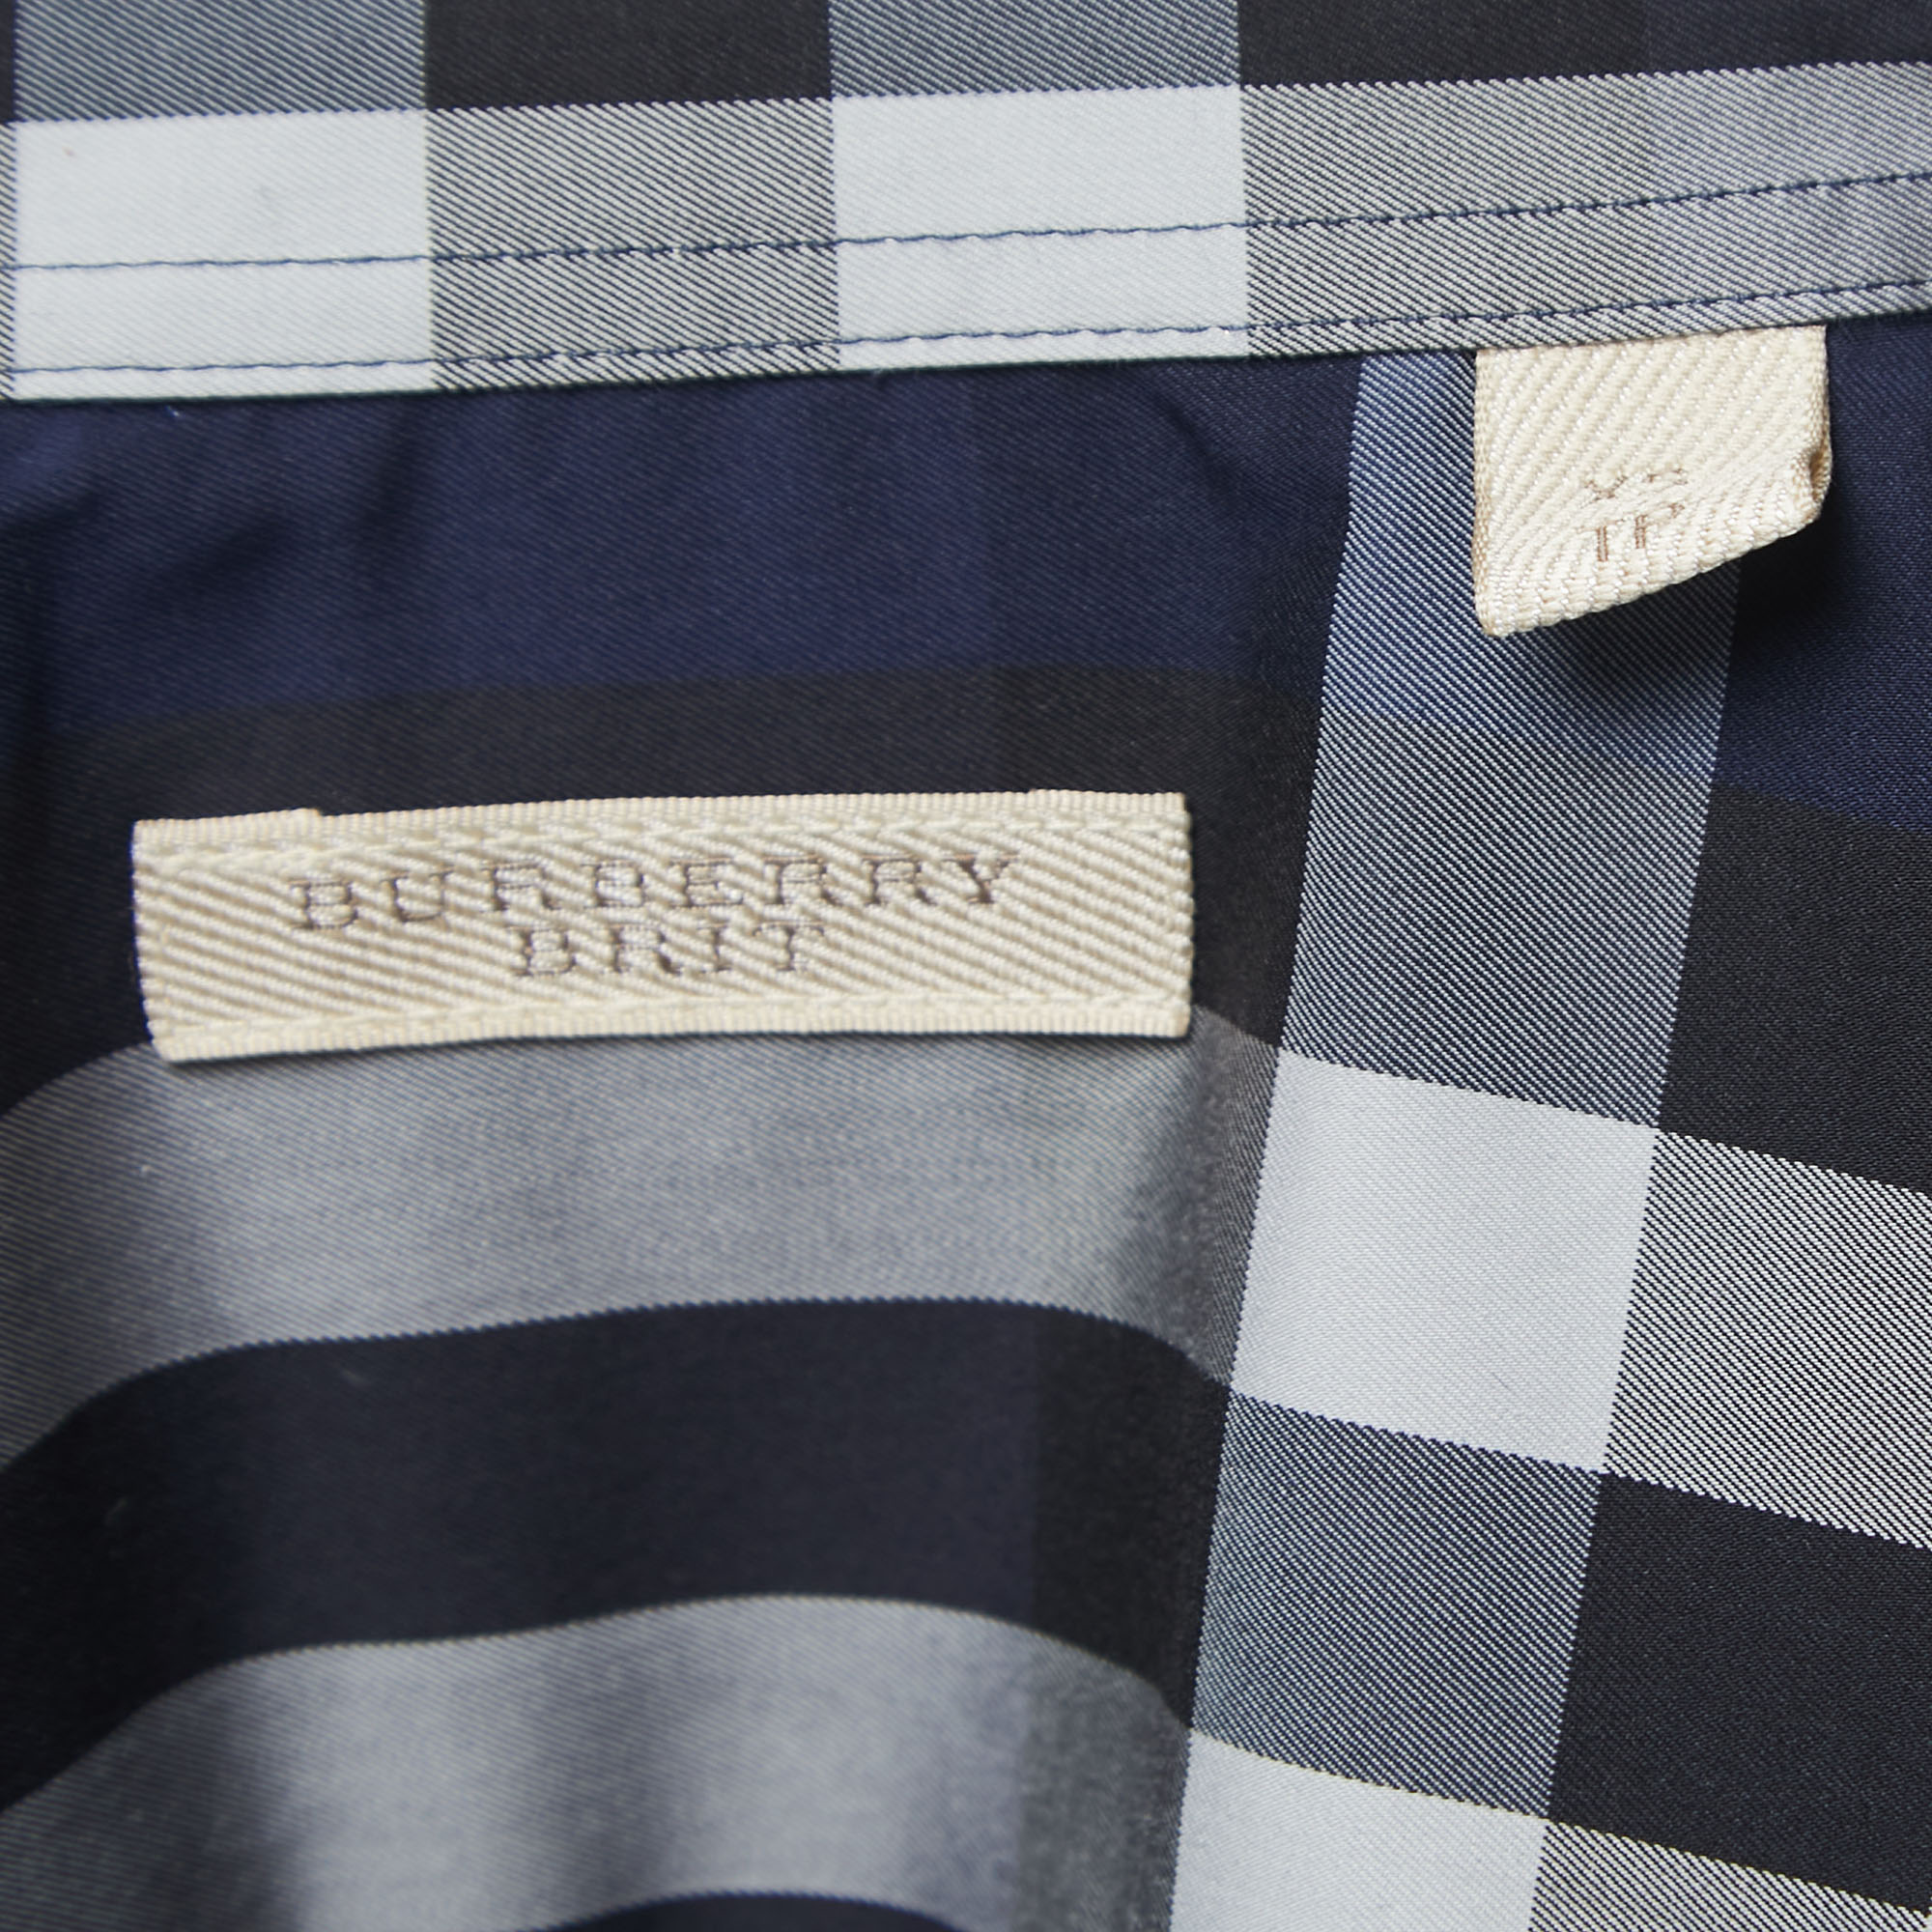 Burberry Brit Navy Blue Checked Cotton Blend Full Sleeve Shirt XS